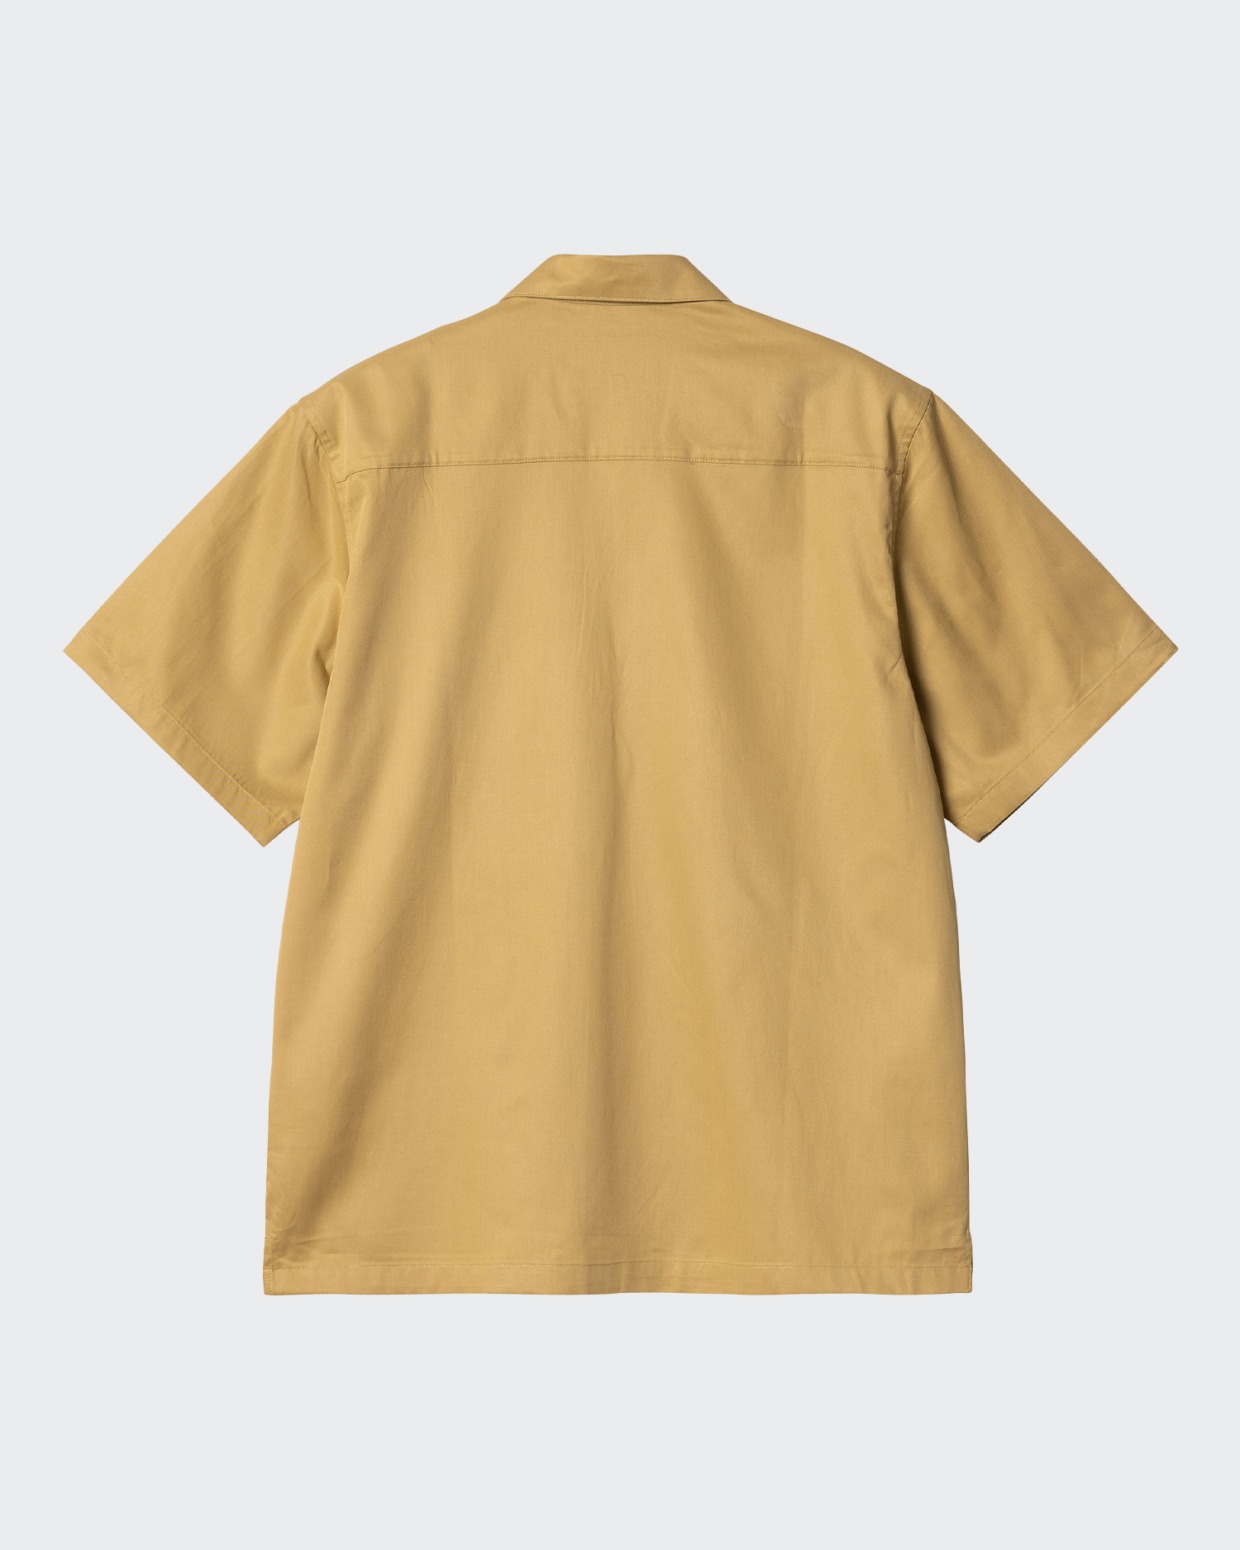 Carhartt WIP Delray Shirt